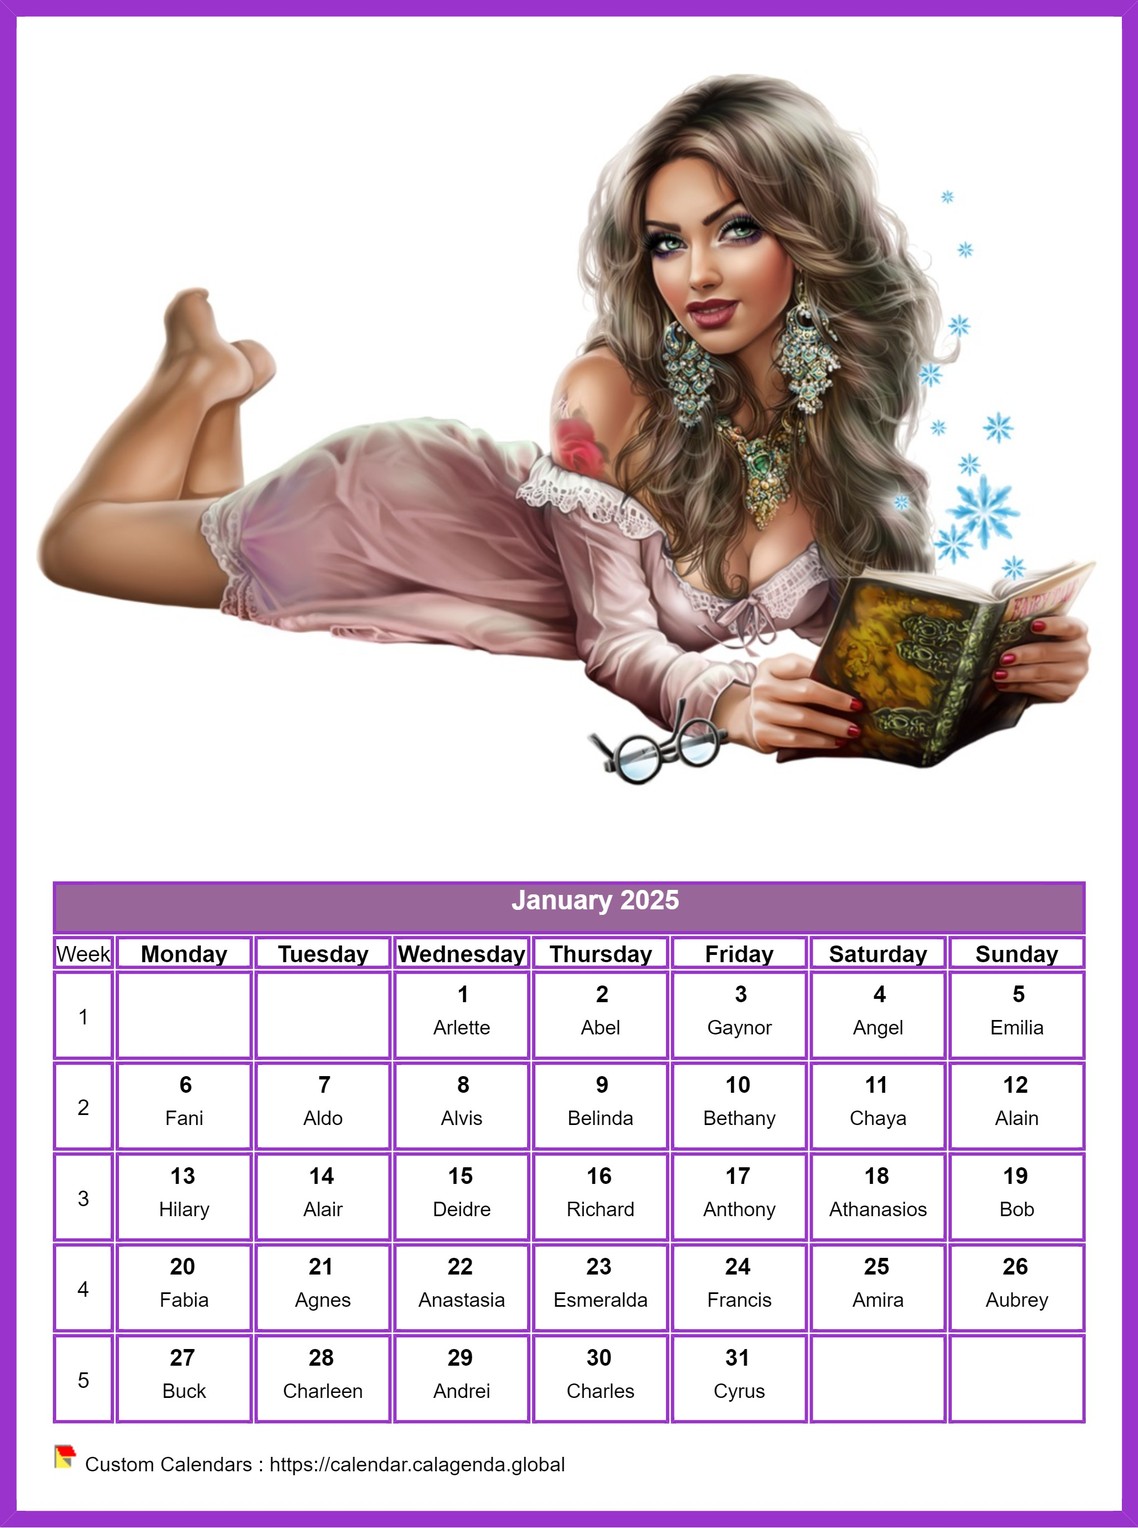 Calendar January 2025 women